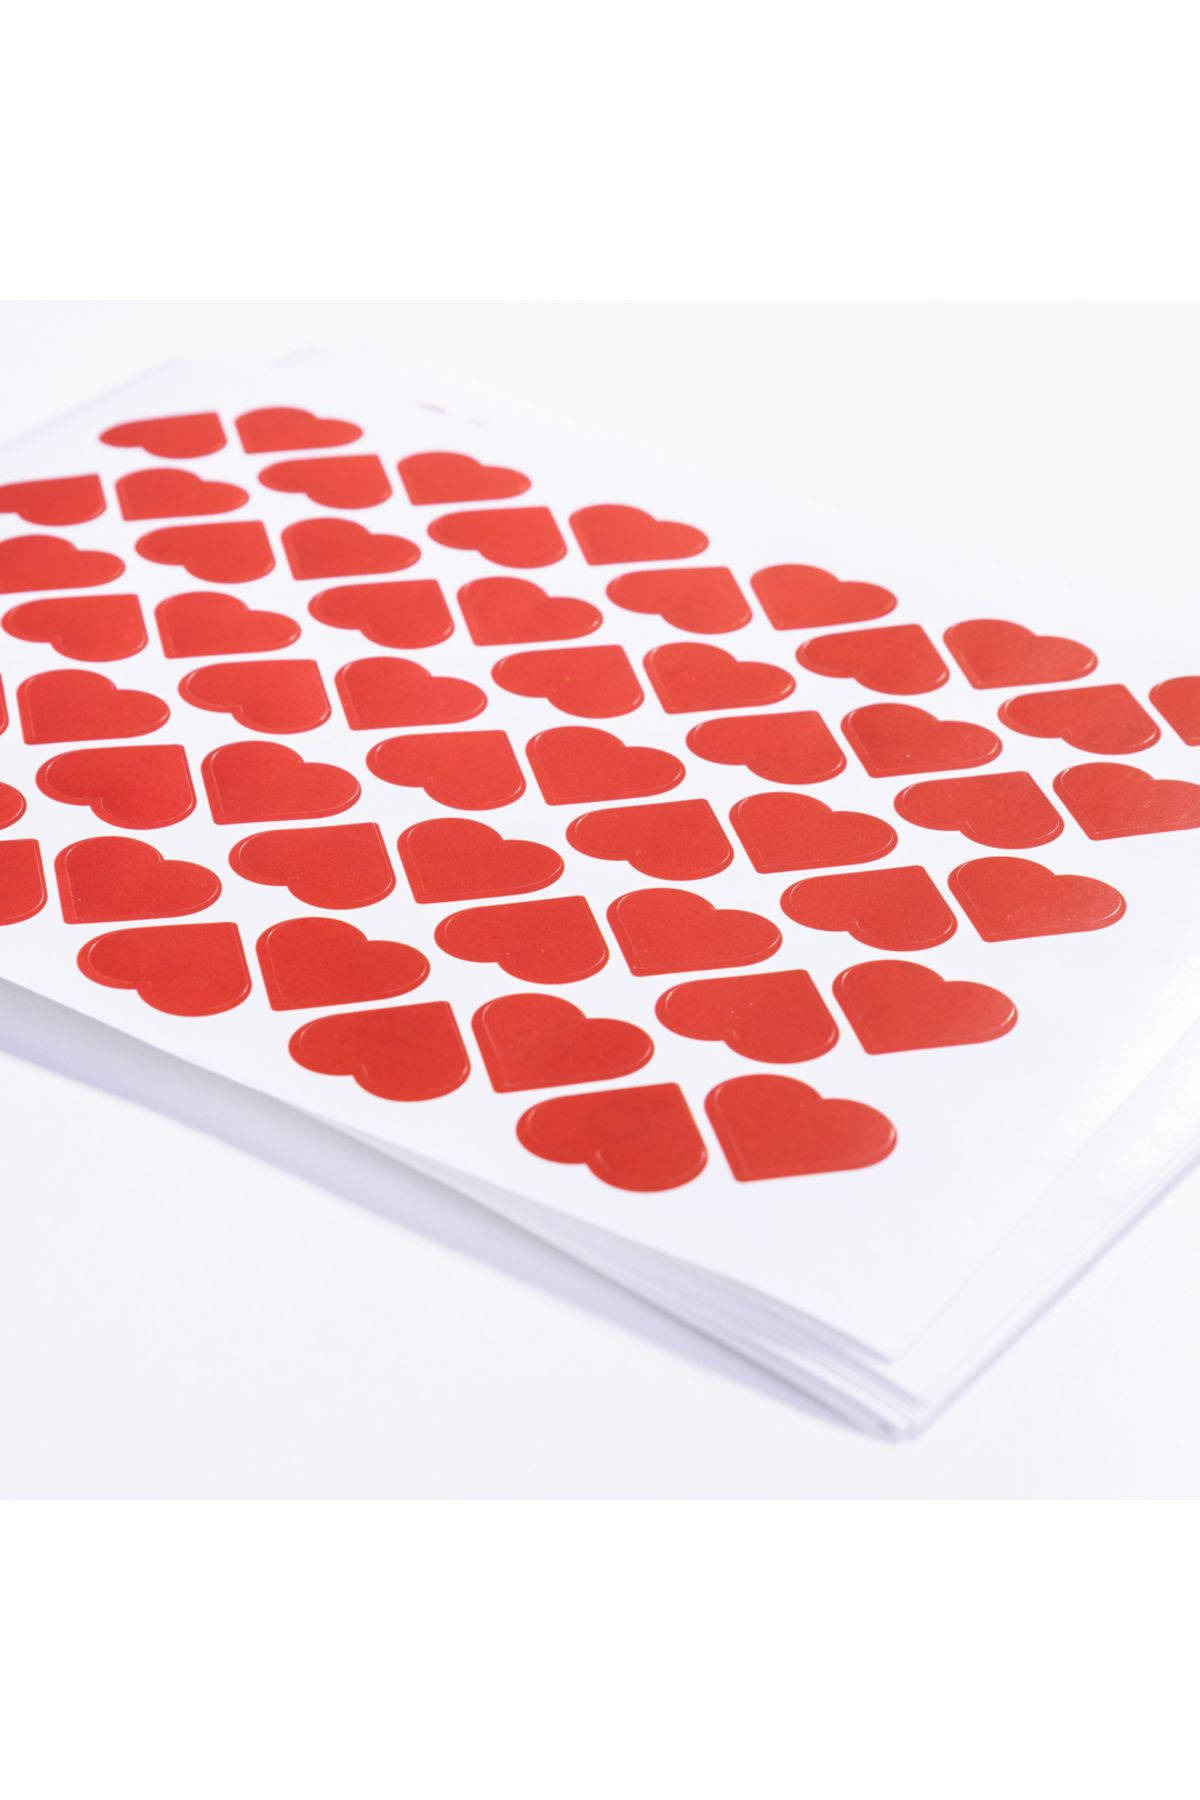 Bimotif Dikey şerit kalpli sticker seti, 60 adet